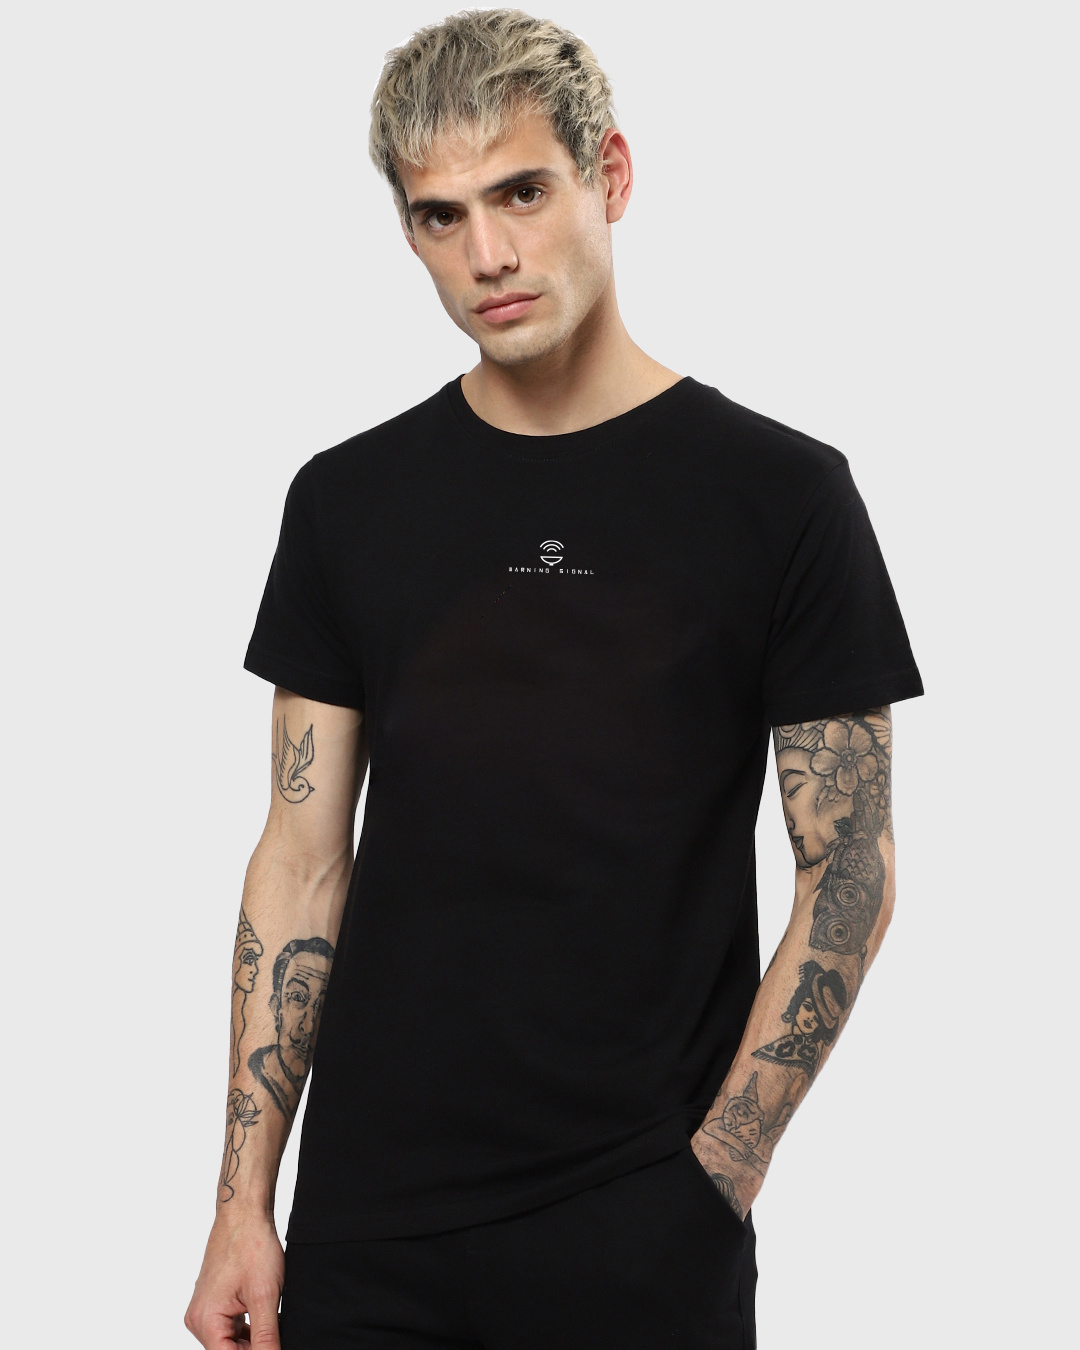 Buy Capricorn Printed Men's Half Sleeve Black T-shirt (Small) at